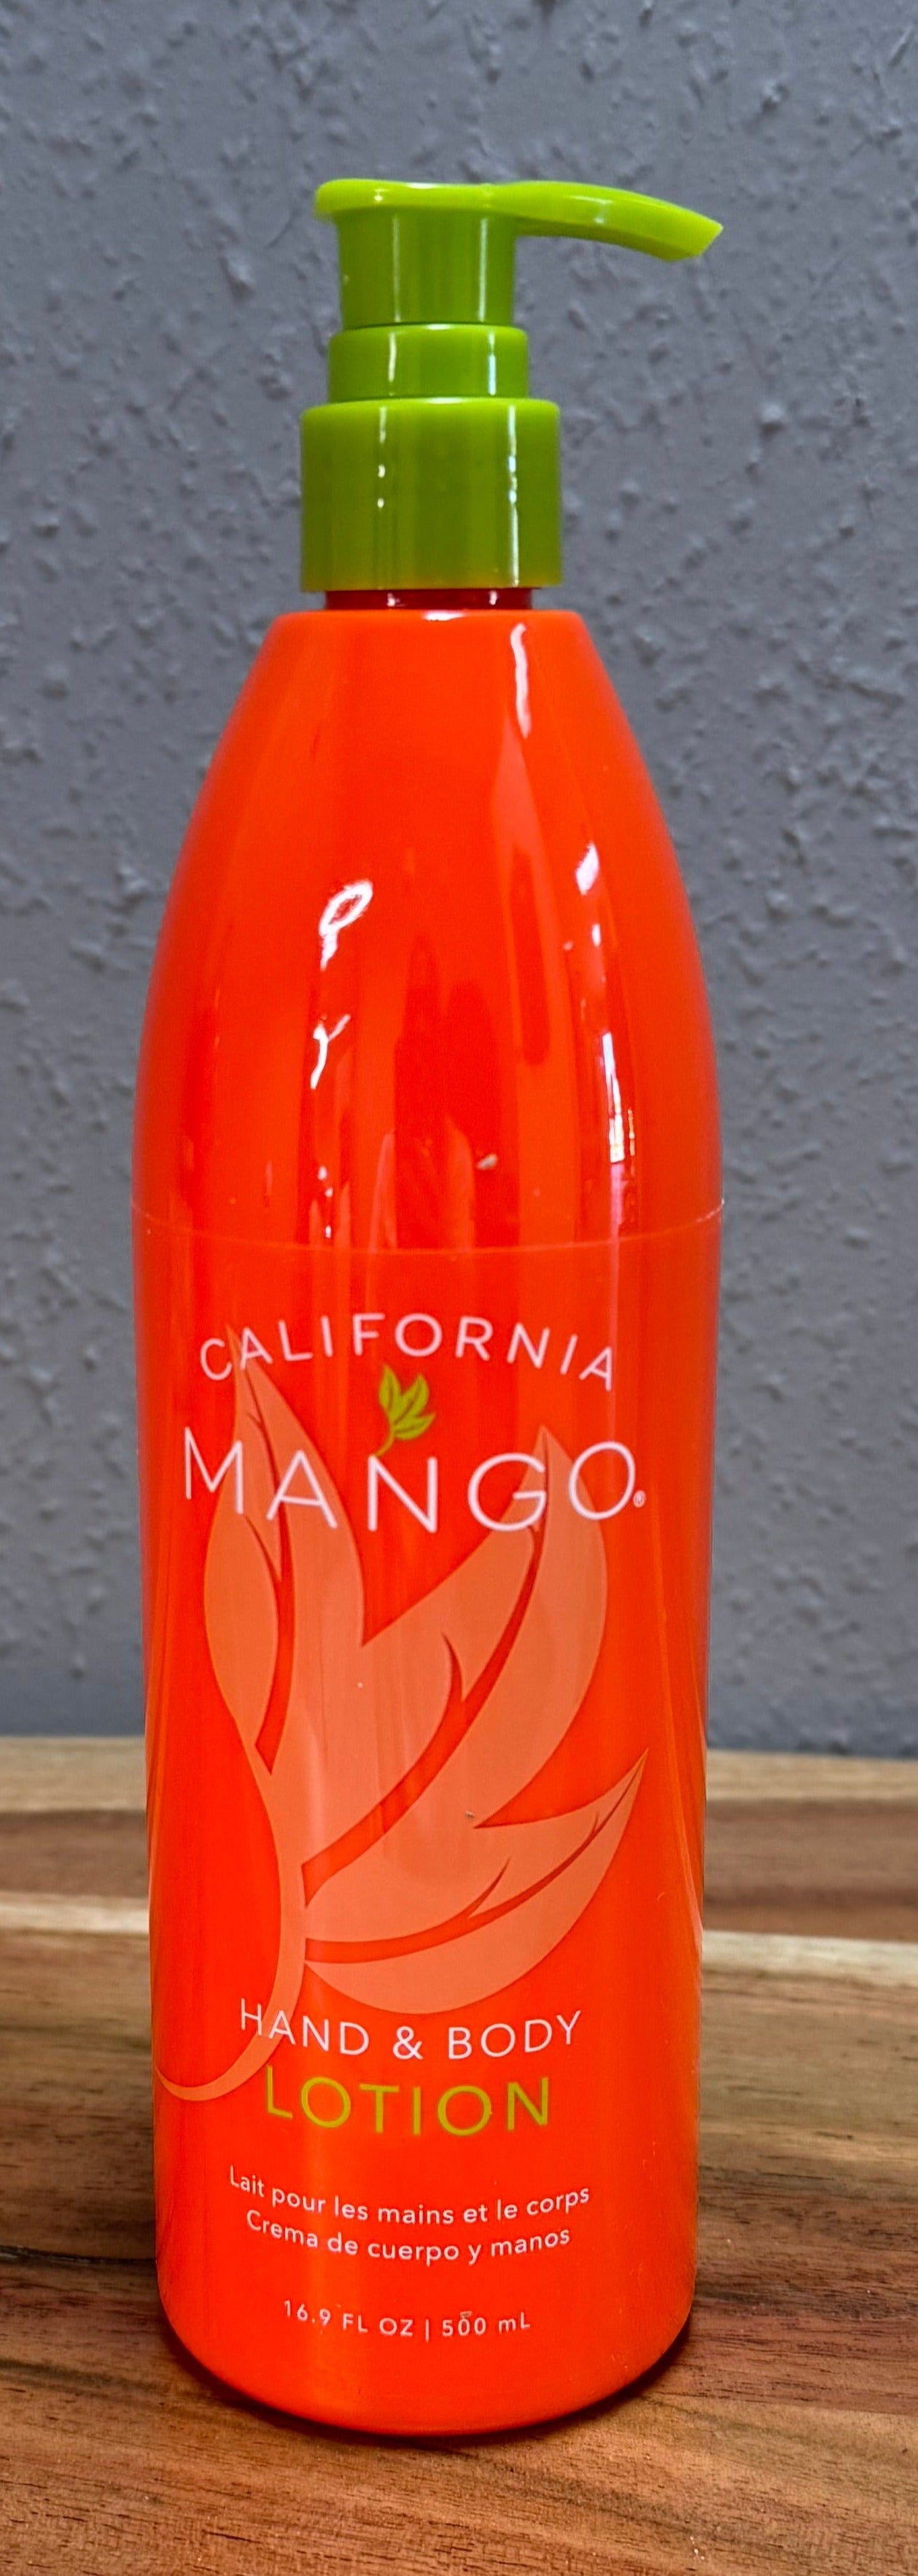 California Mango Hand & Body Lotion 16.9 fl